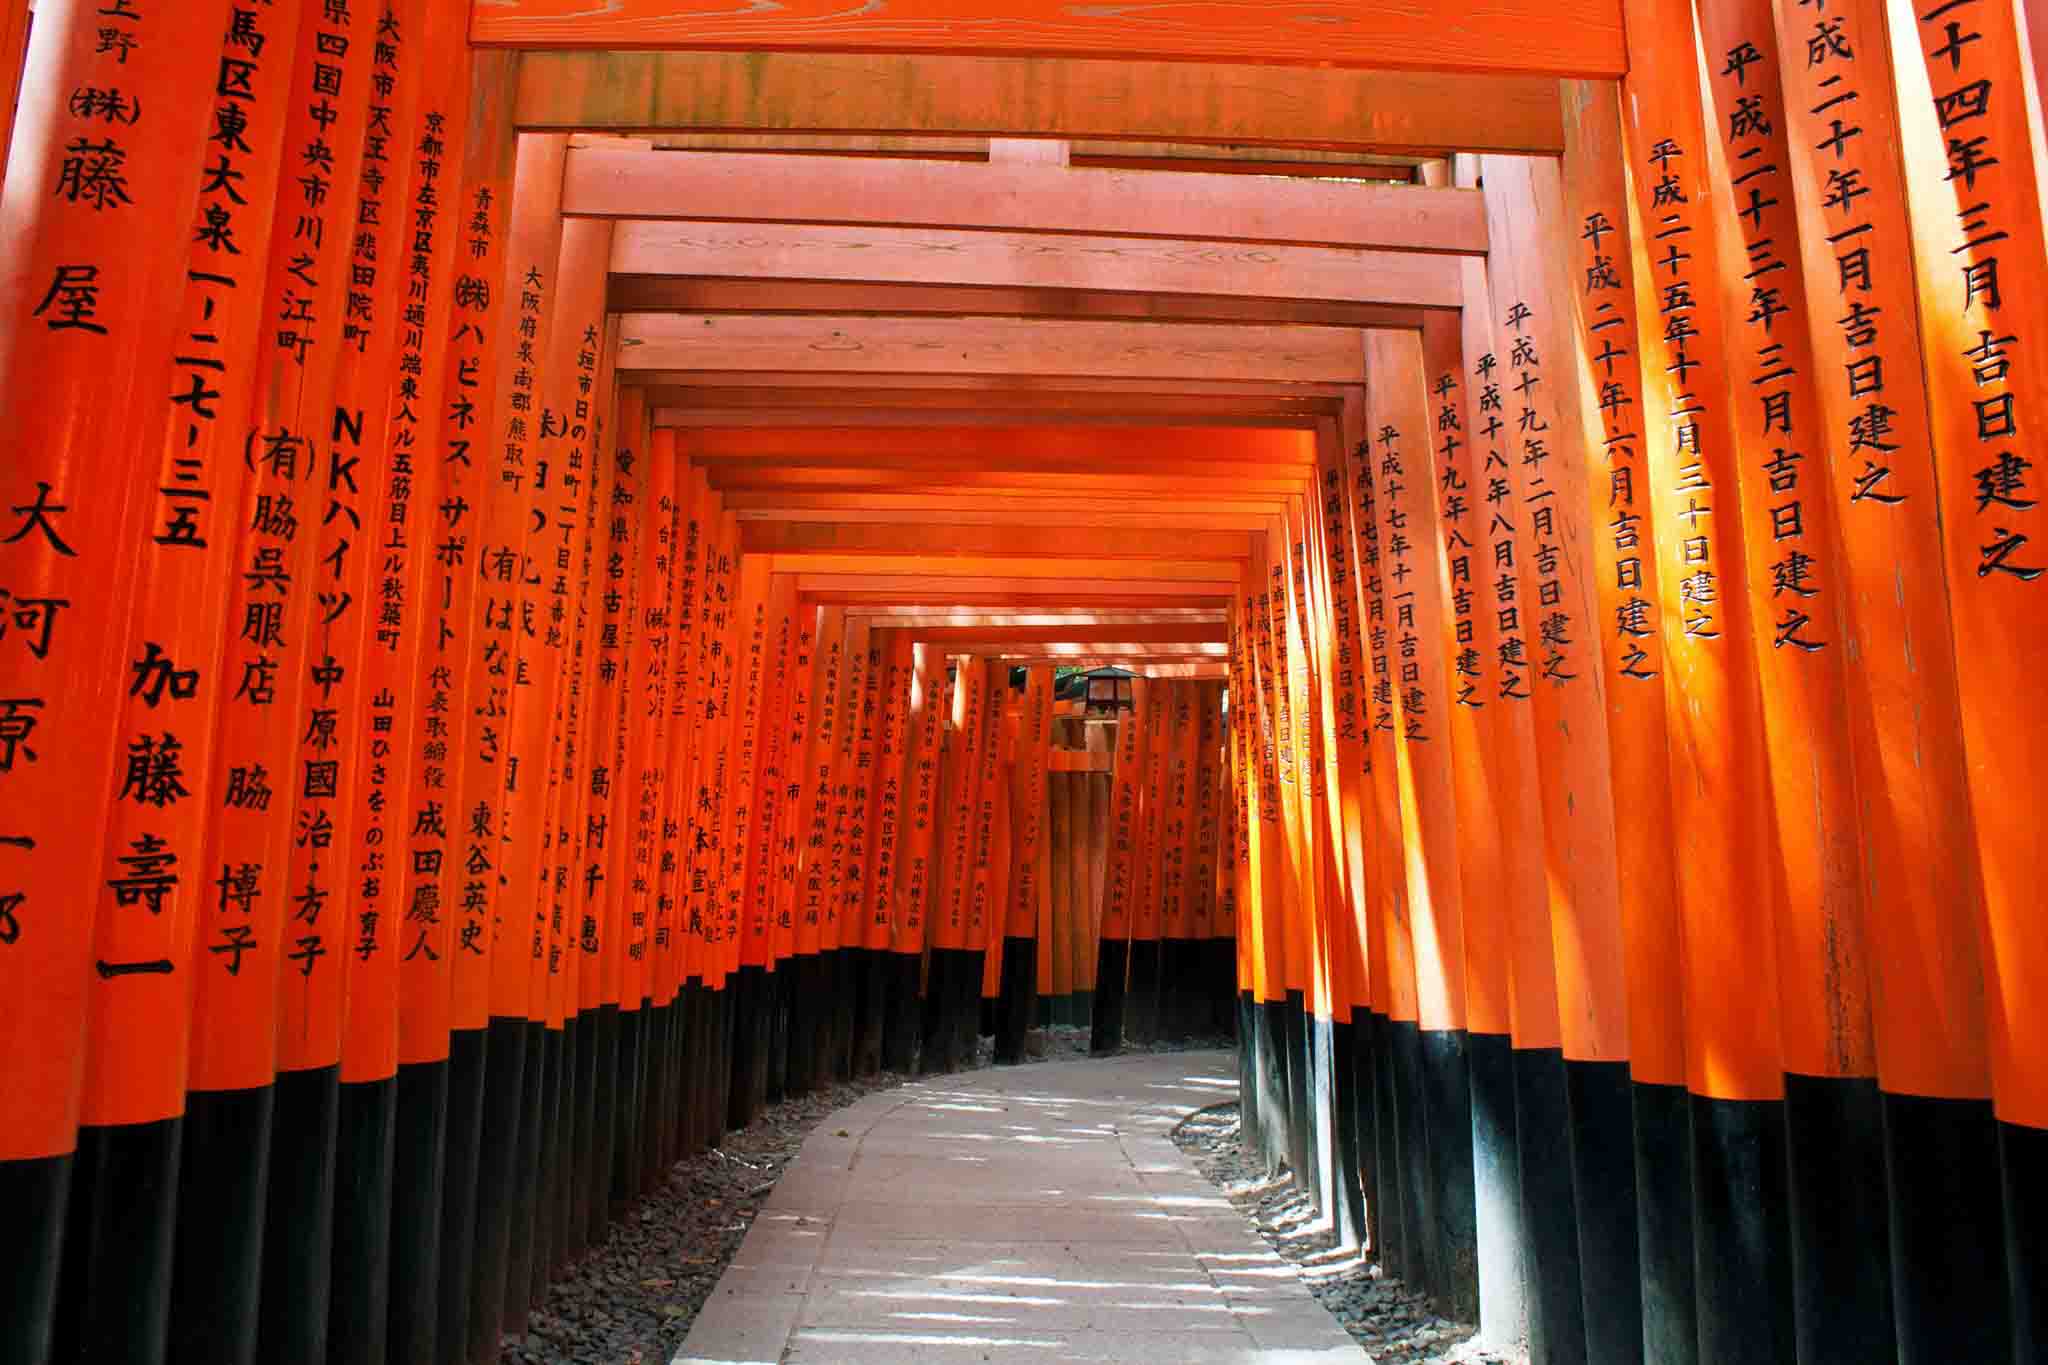 Torii gates in Japan for Intego Travel